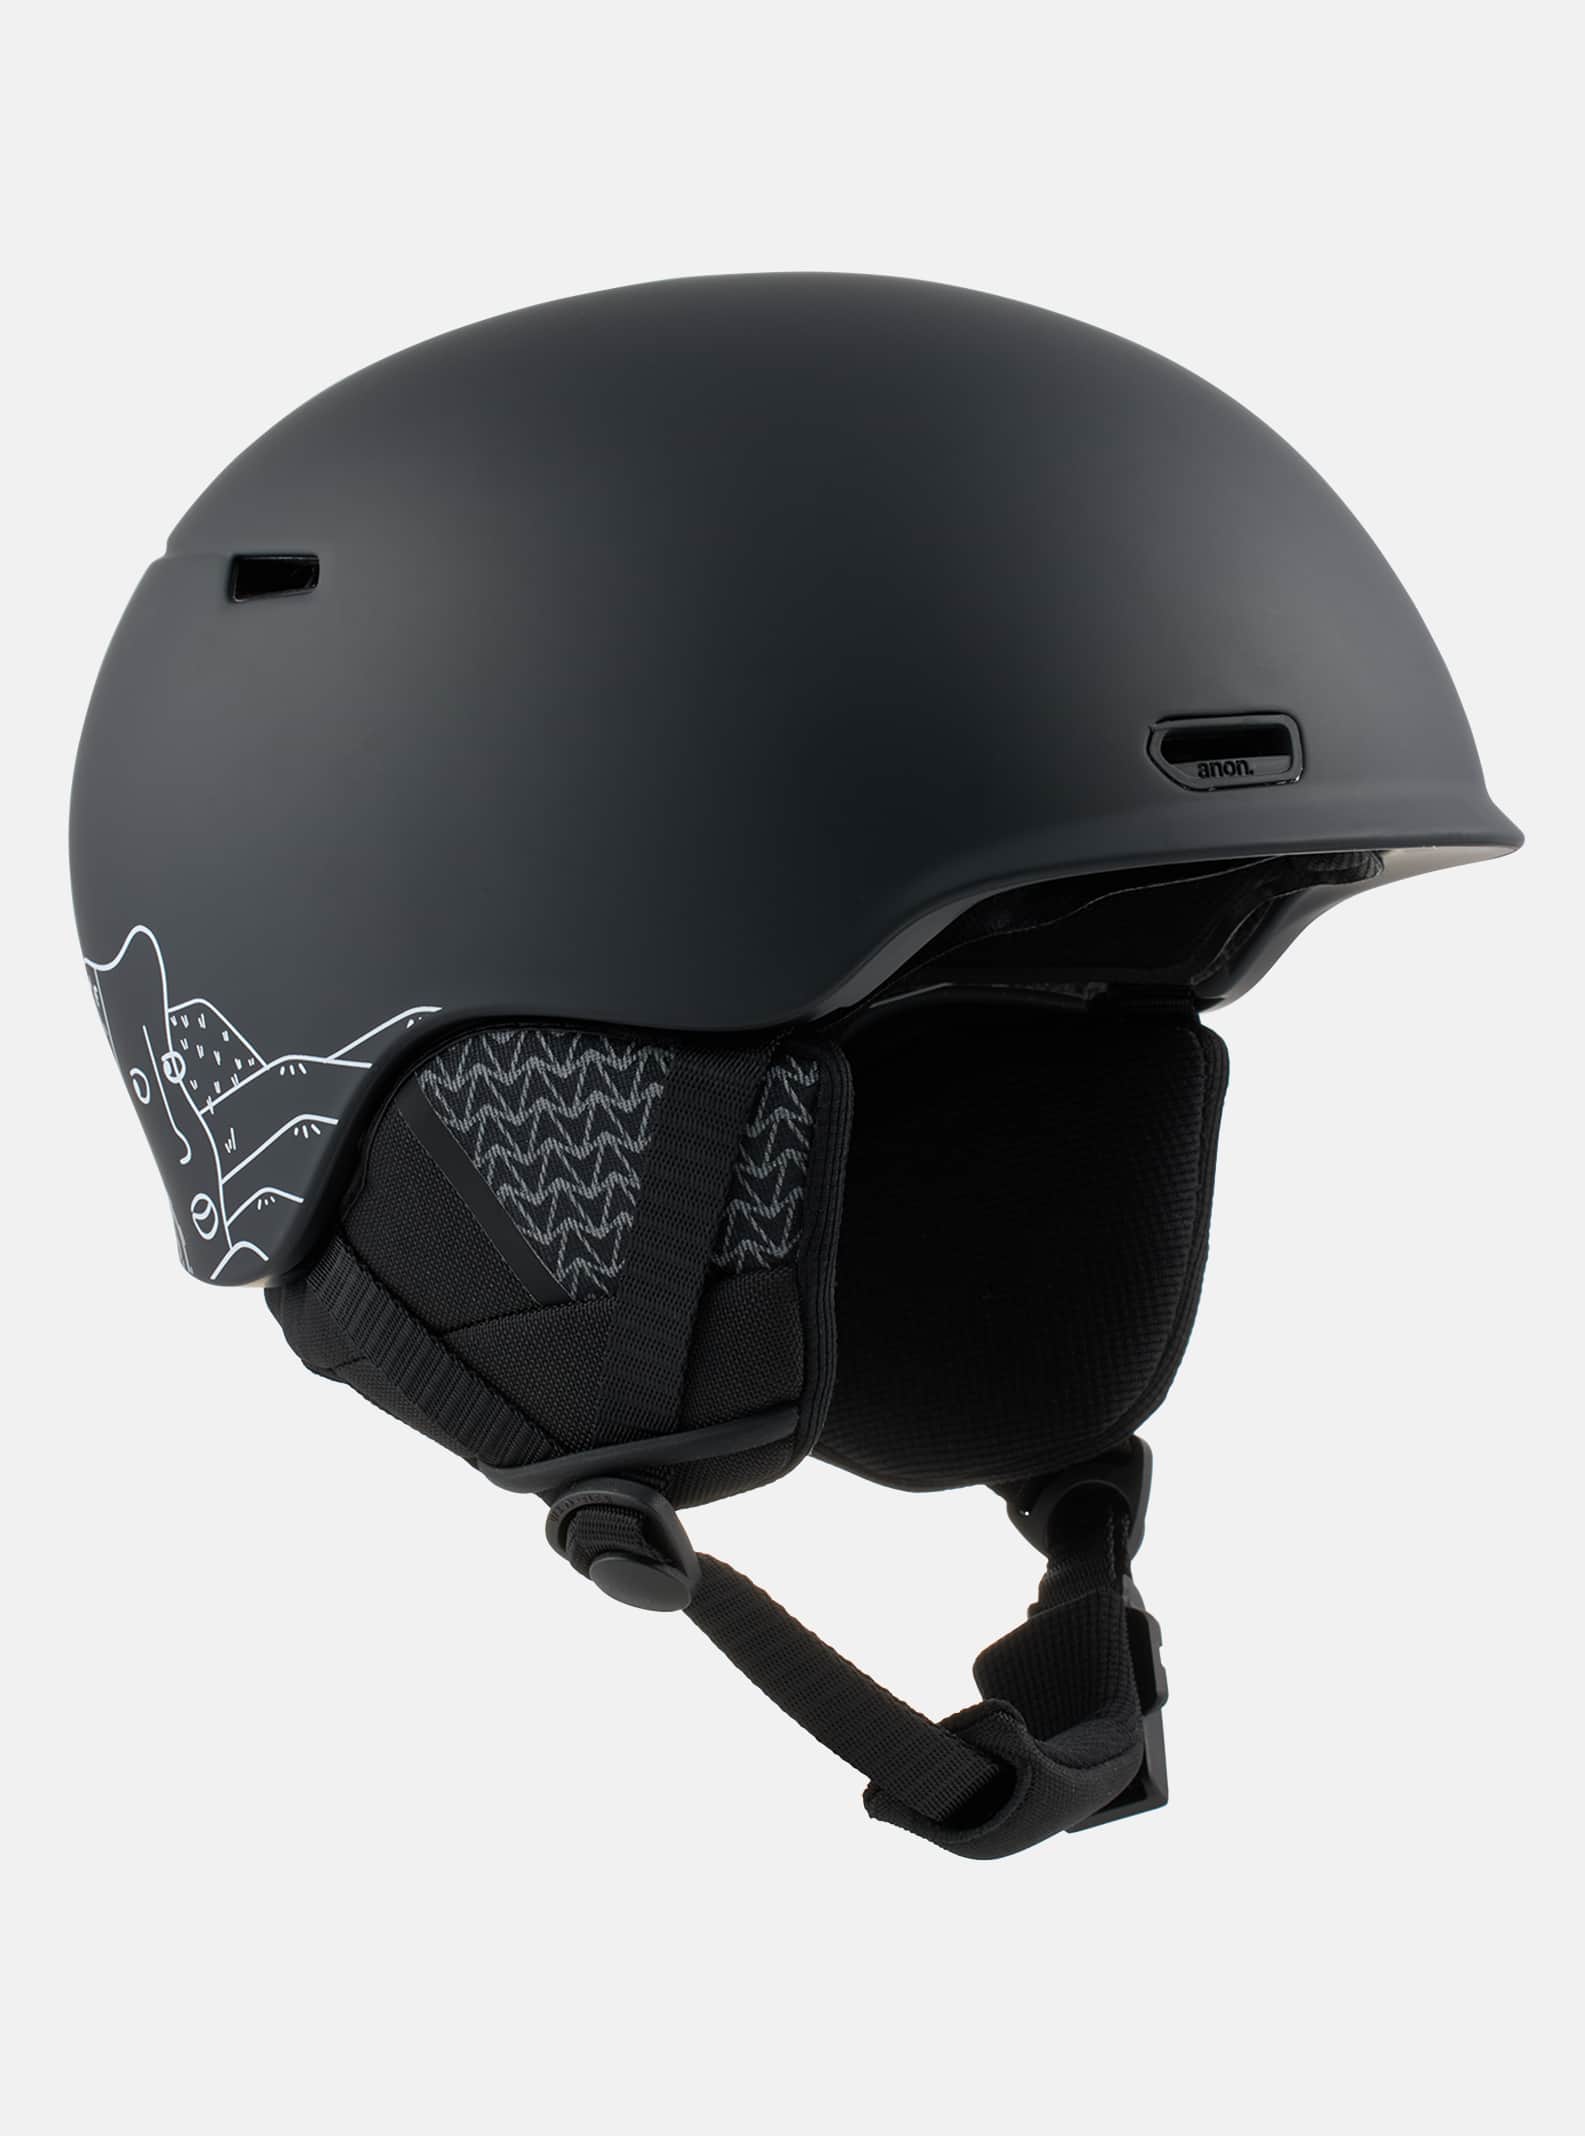 Women's Helmets | Ski & Snowboard Helmets for Women | Anon Optics US